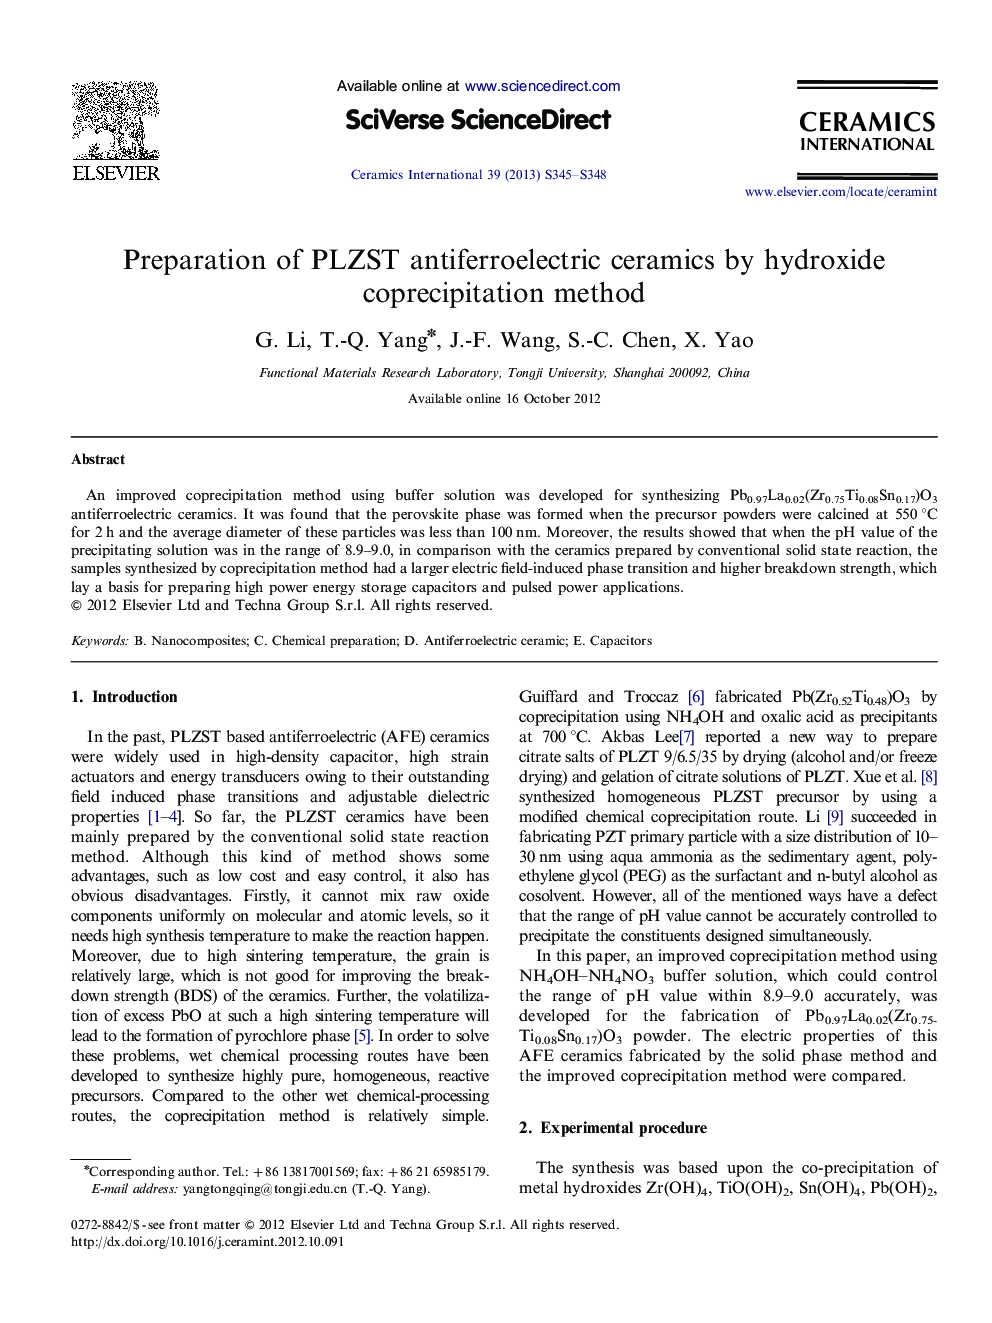 Preparation of PLZST antiferroelectric ceramics by hydroxide coprecipitation method